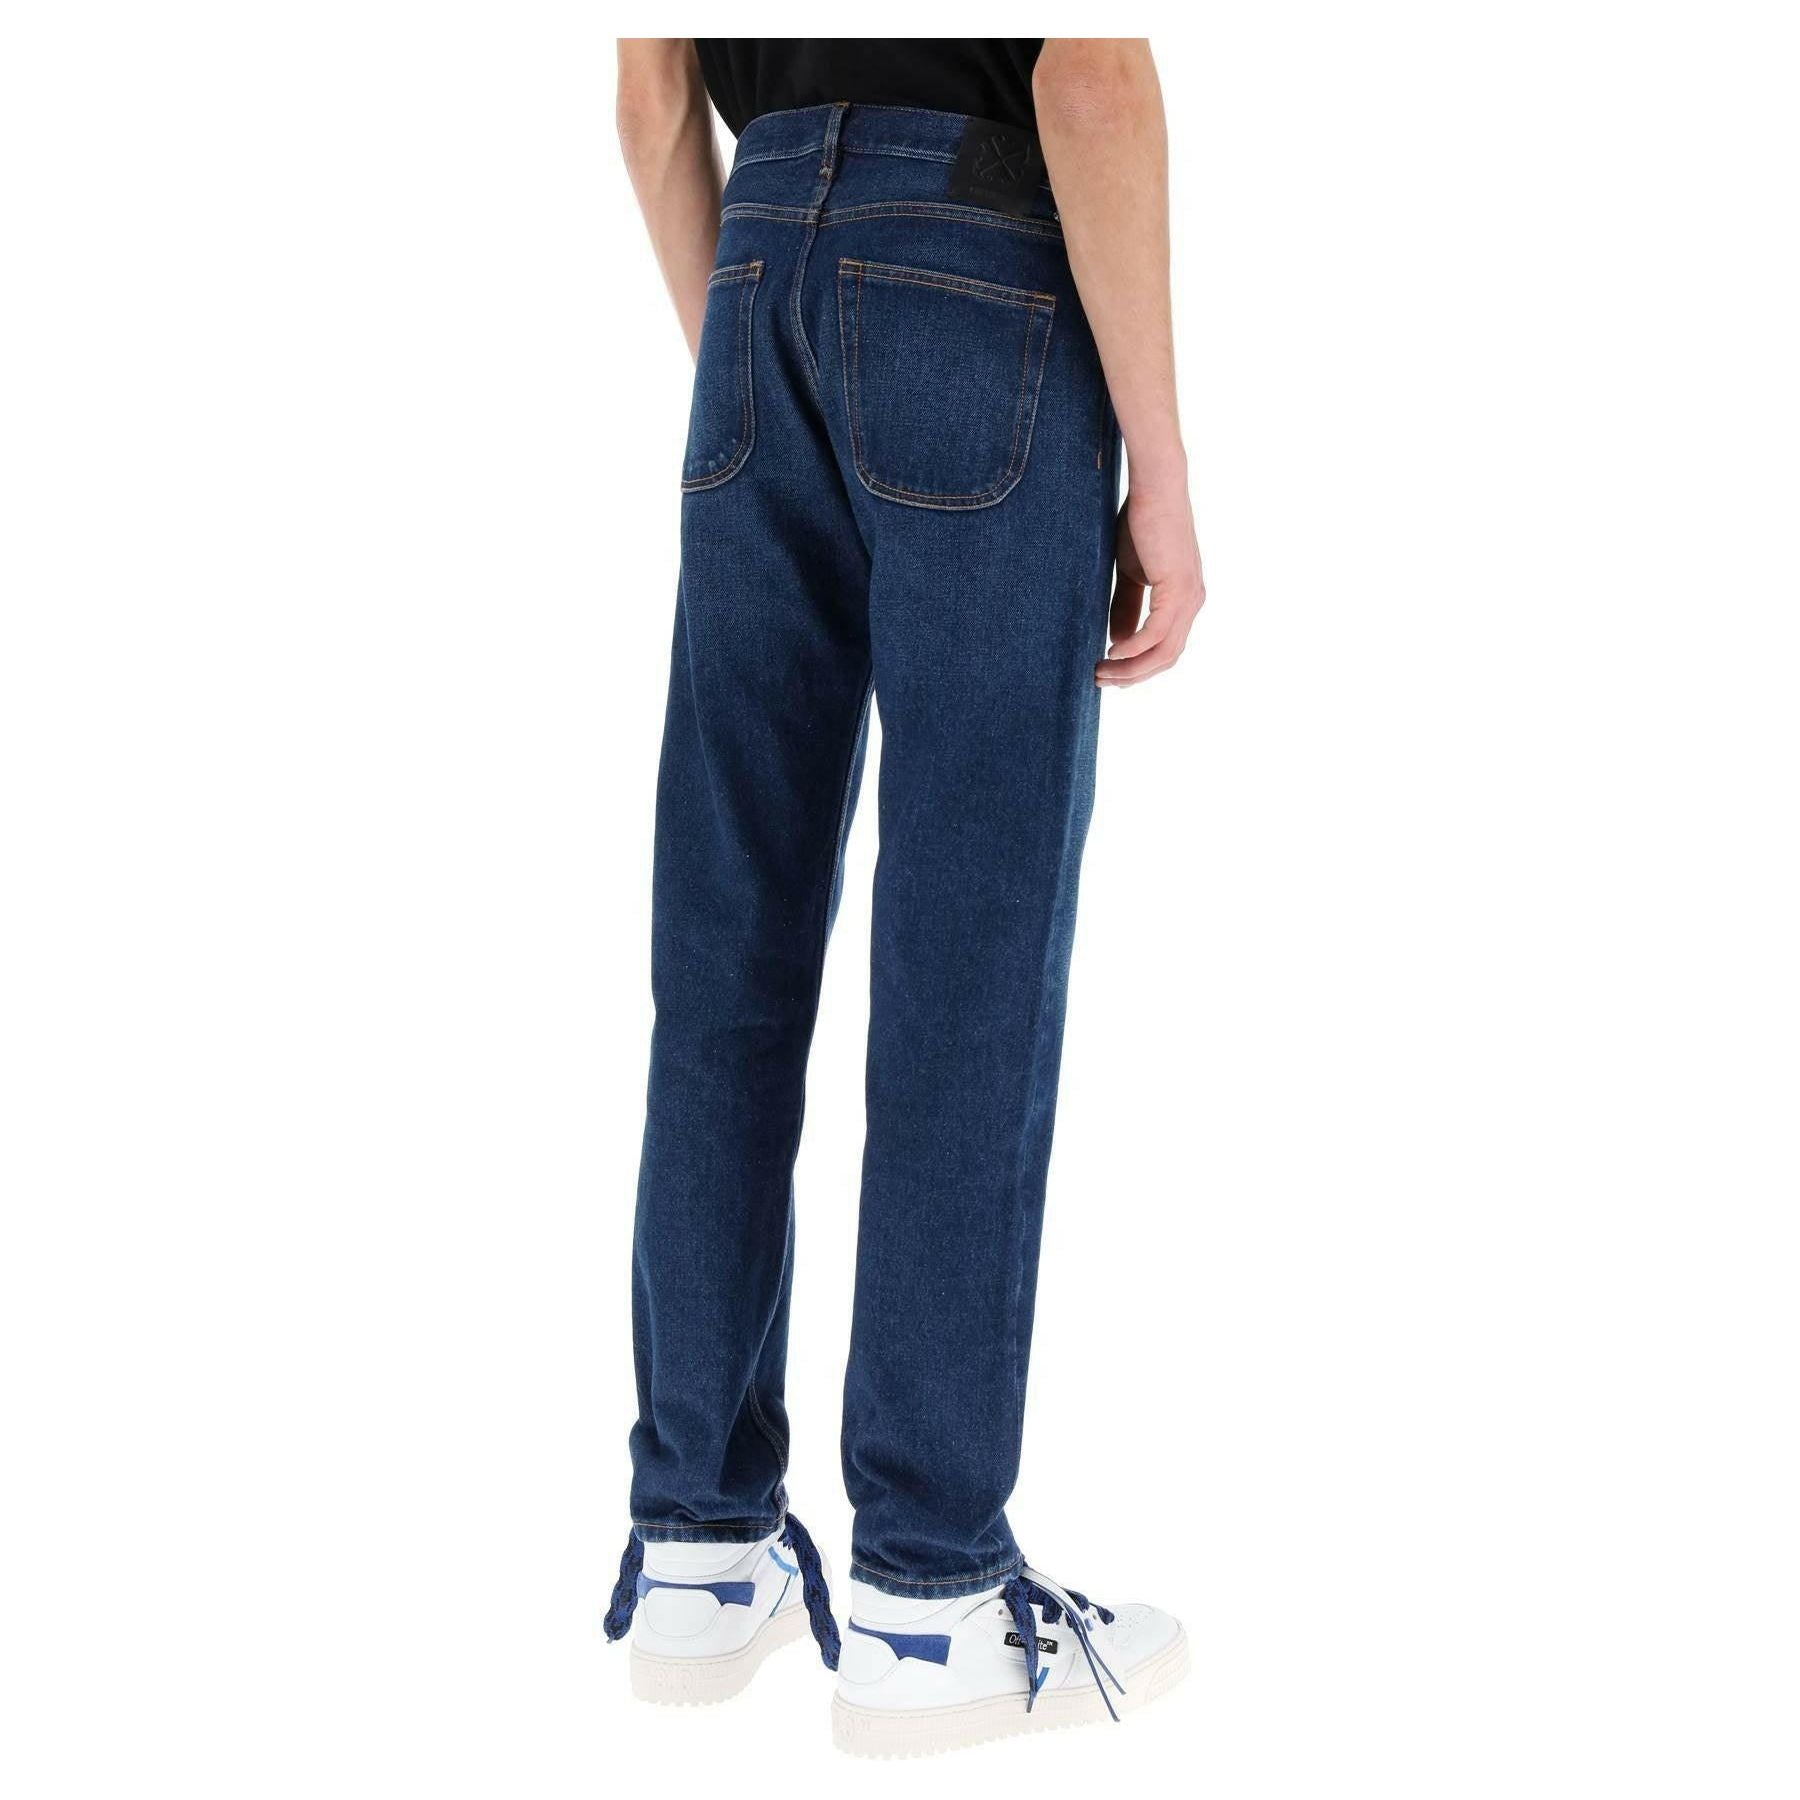 Medium Blue Regular-Fit Cotton Jeans OFF-WHITE JOHN JULIA.